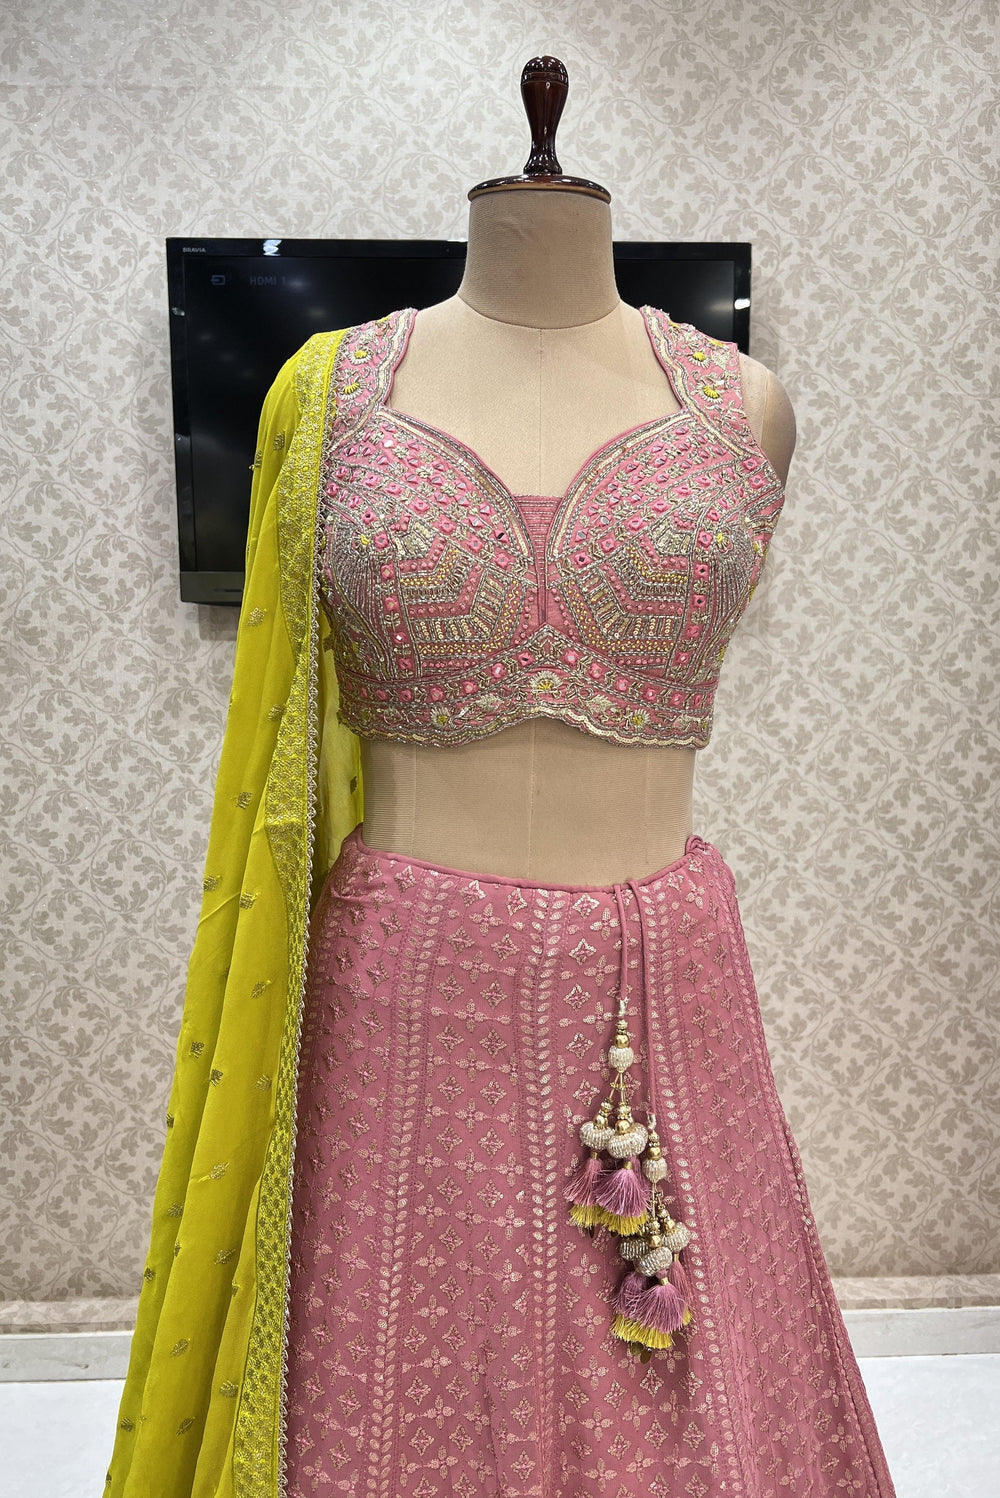 Onion Zari, Thread, Sequins, Mirror, Beads and Thread work Crop Top Lehenga - Seasons Chennai